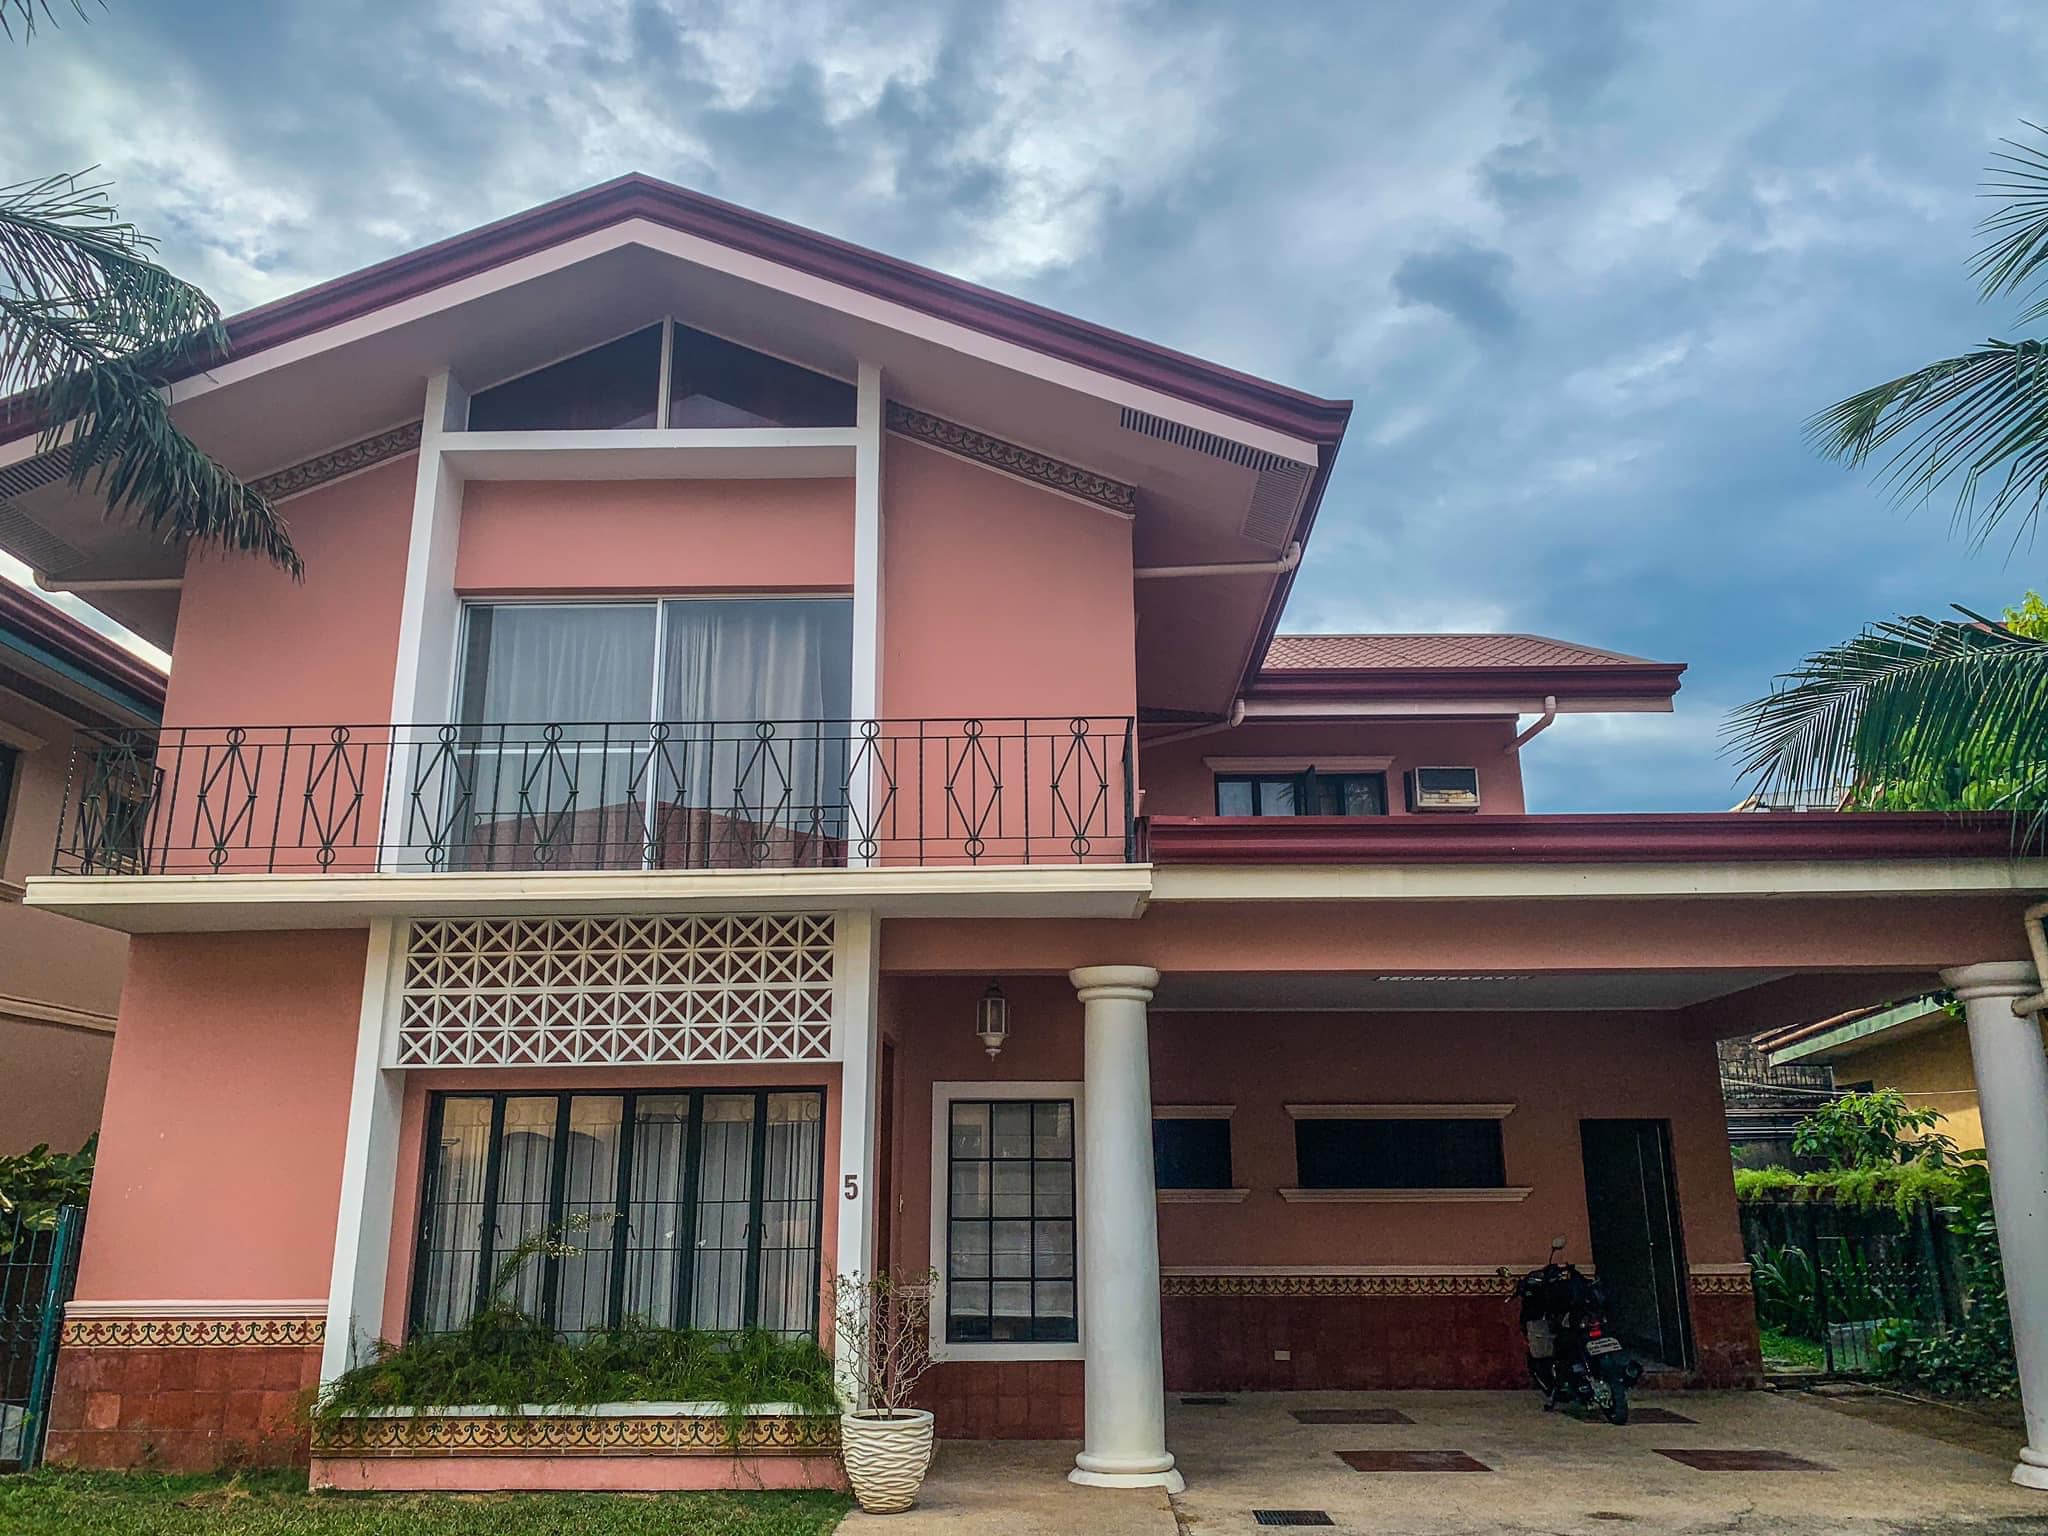 4 Bedroom House For Rent Banilad Mandaue City Cebu